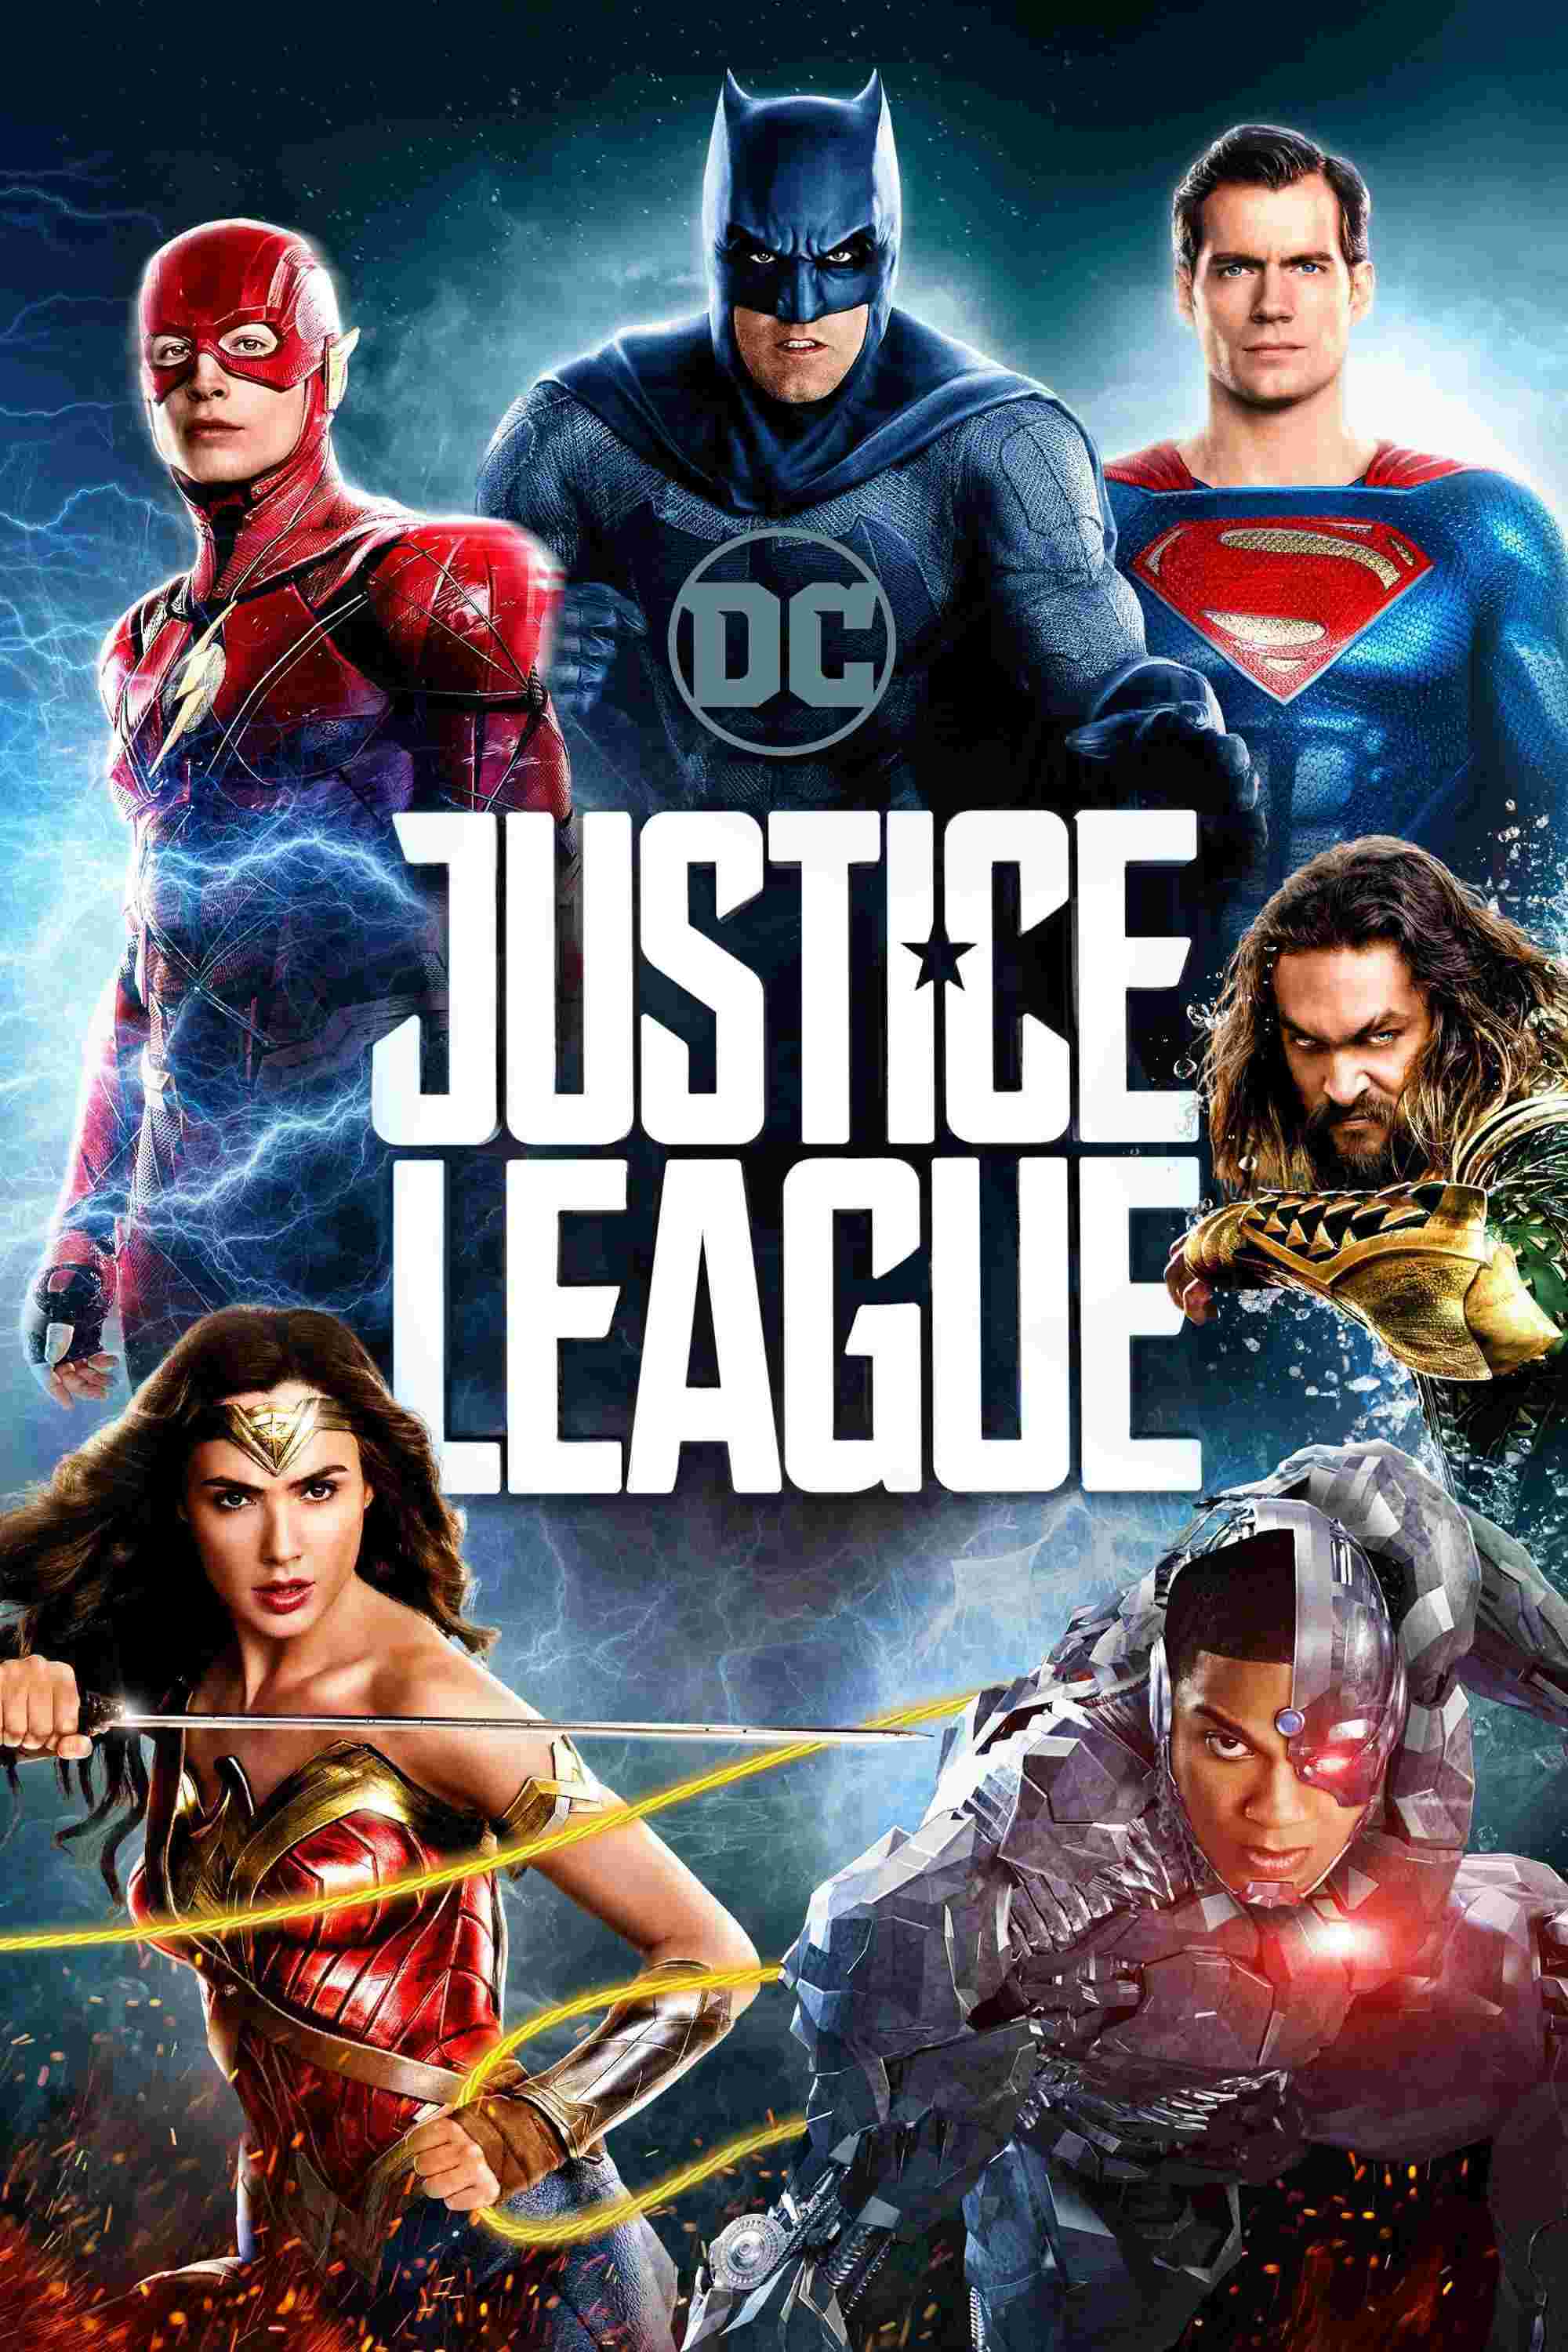 Justice League (2017) Ben Affleck